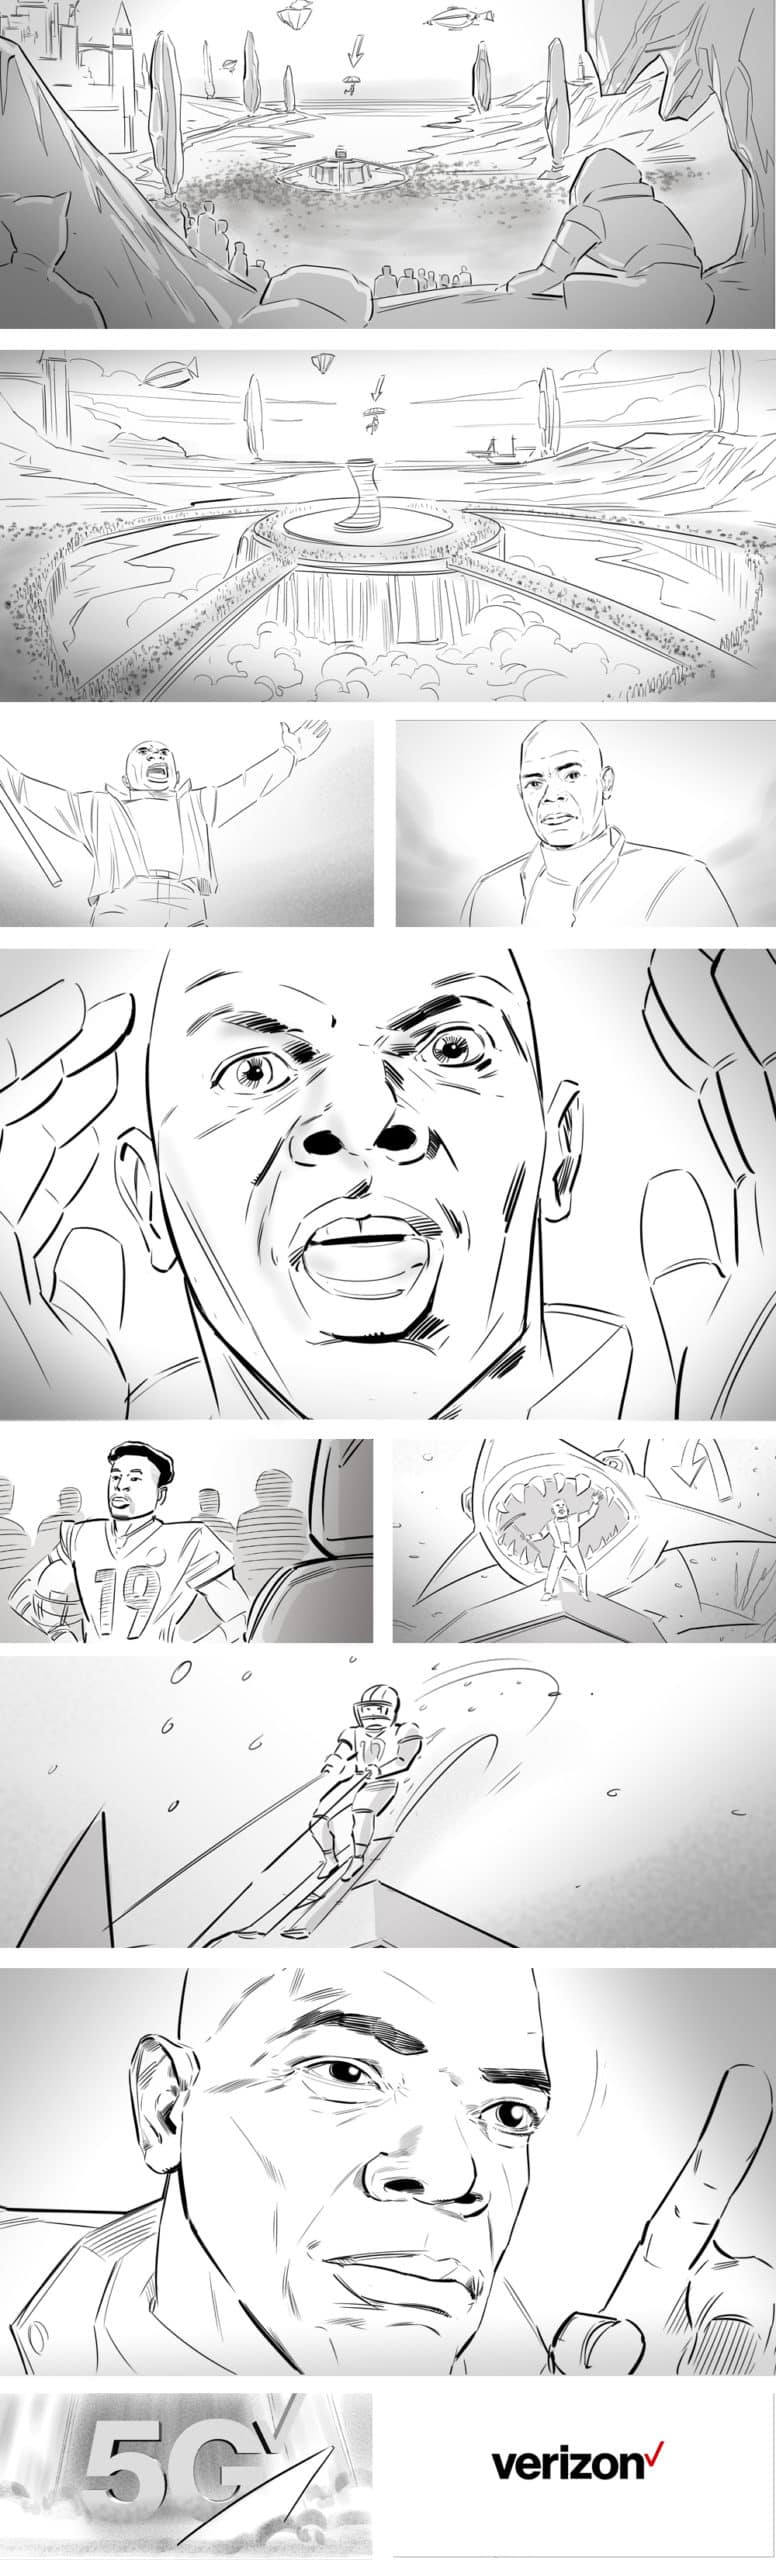 Samuel L Jackson Joe James Storyboard artist Verizon Super Bowl Commercial